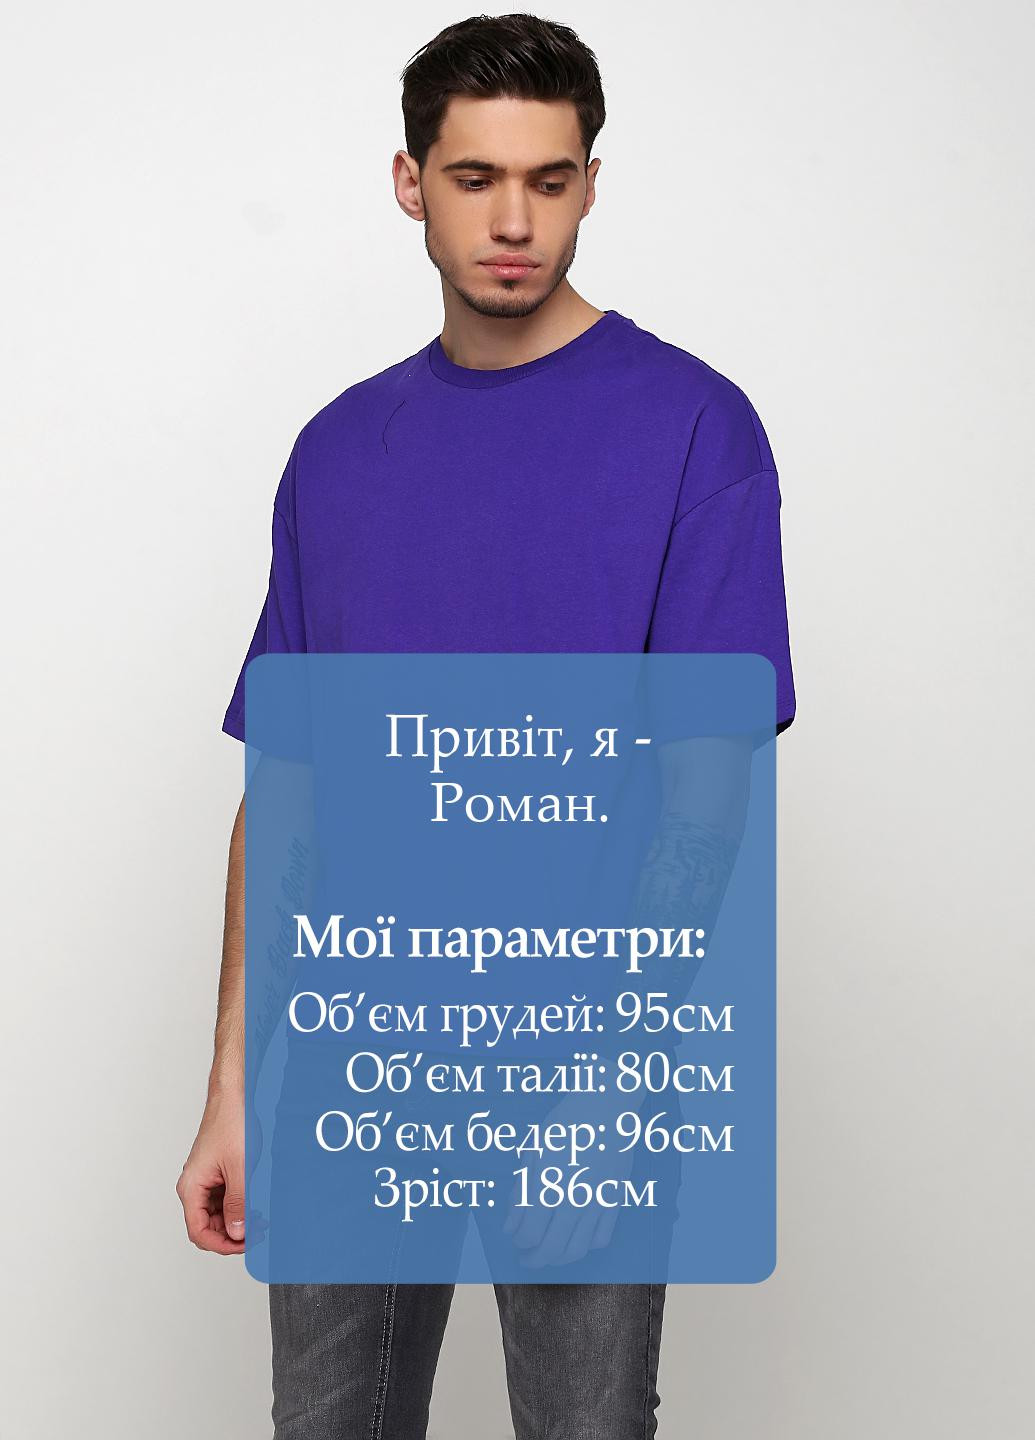 Фиолетовая футболка Bershka